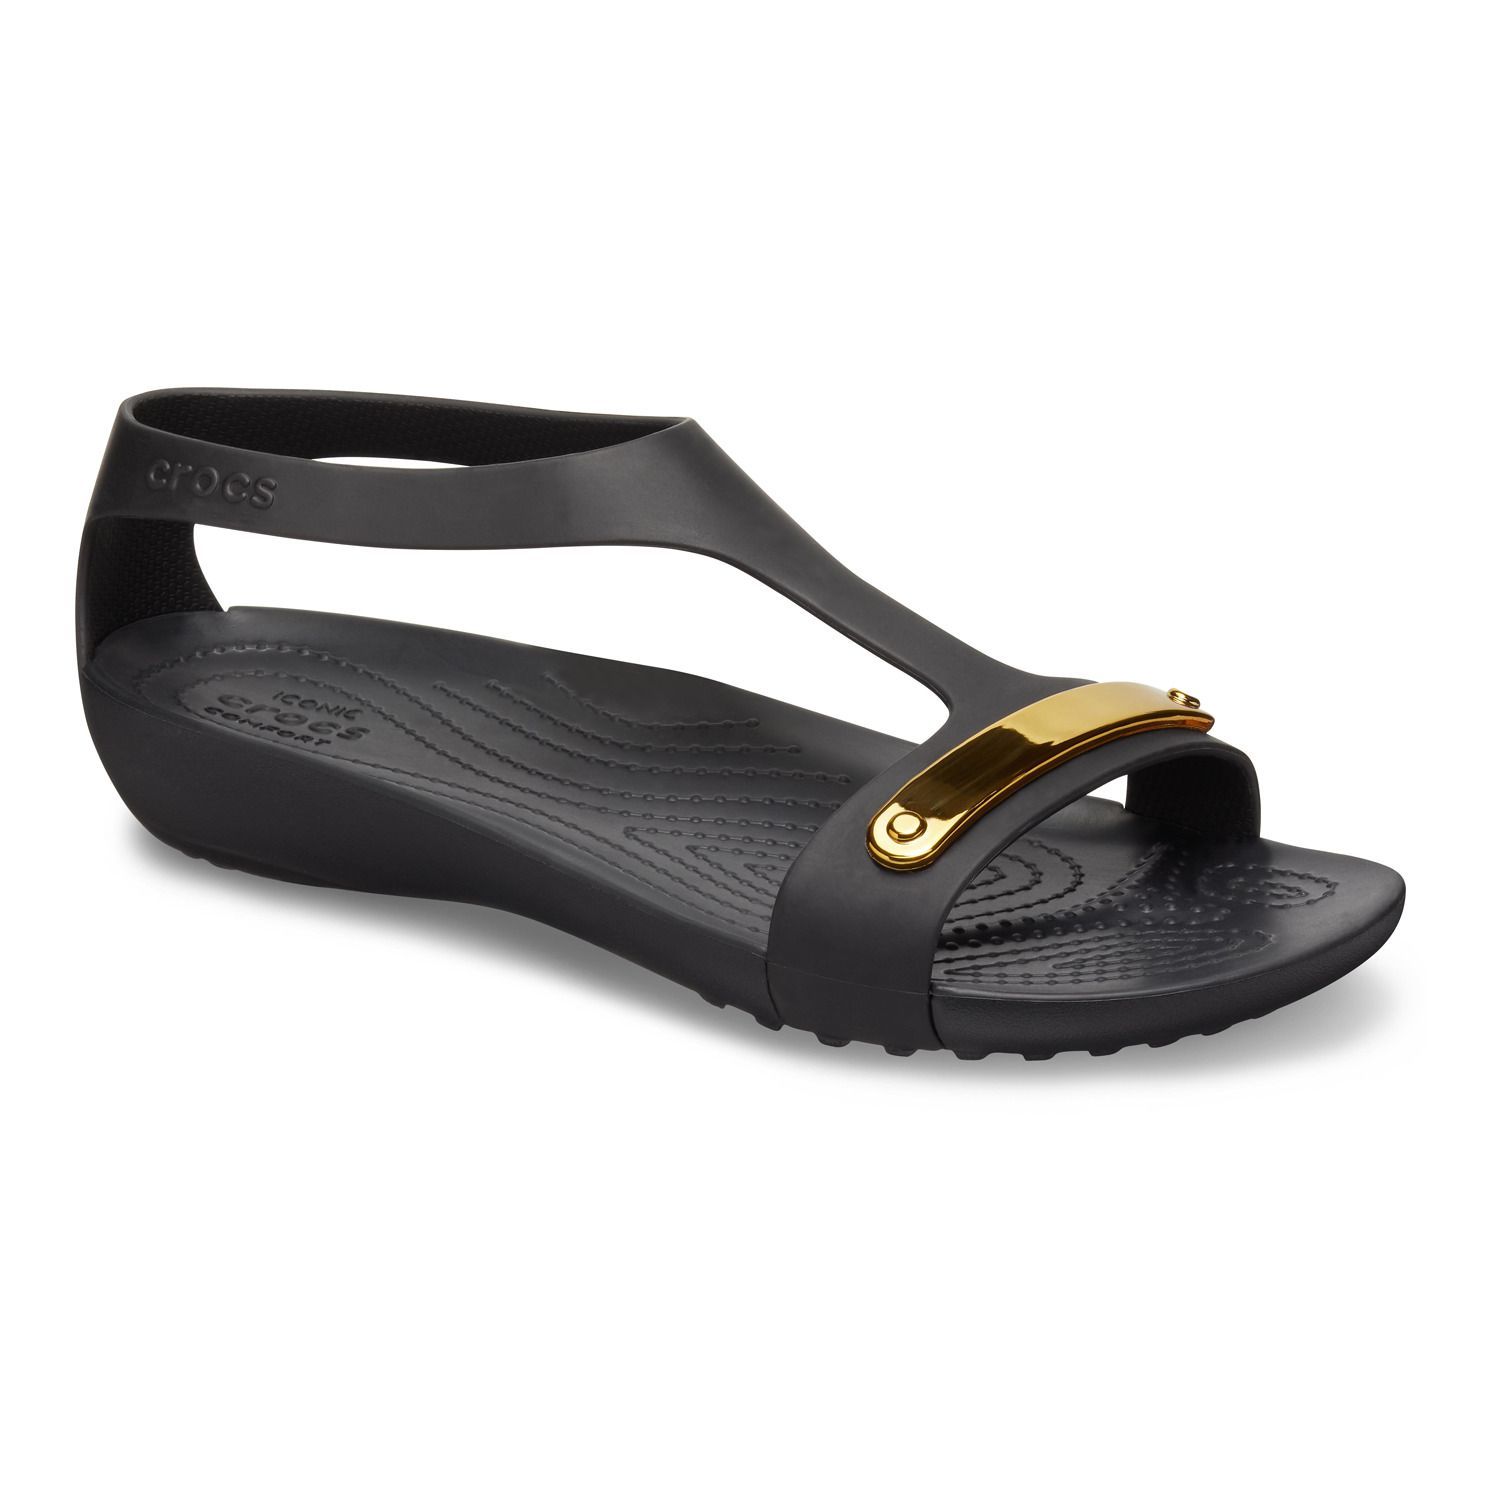 Crocs Serena Metallic Bar Women's Sandals